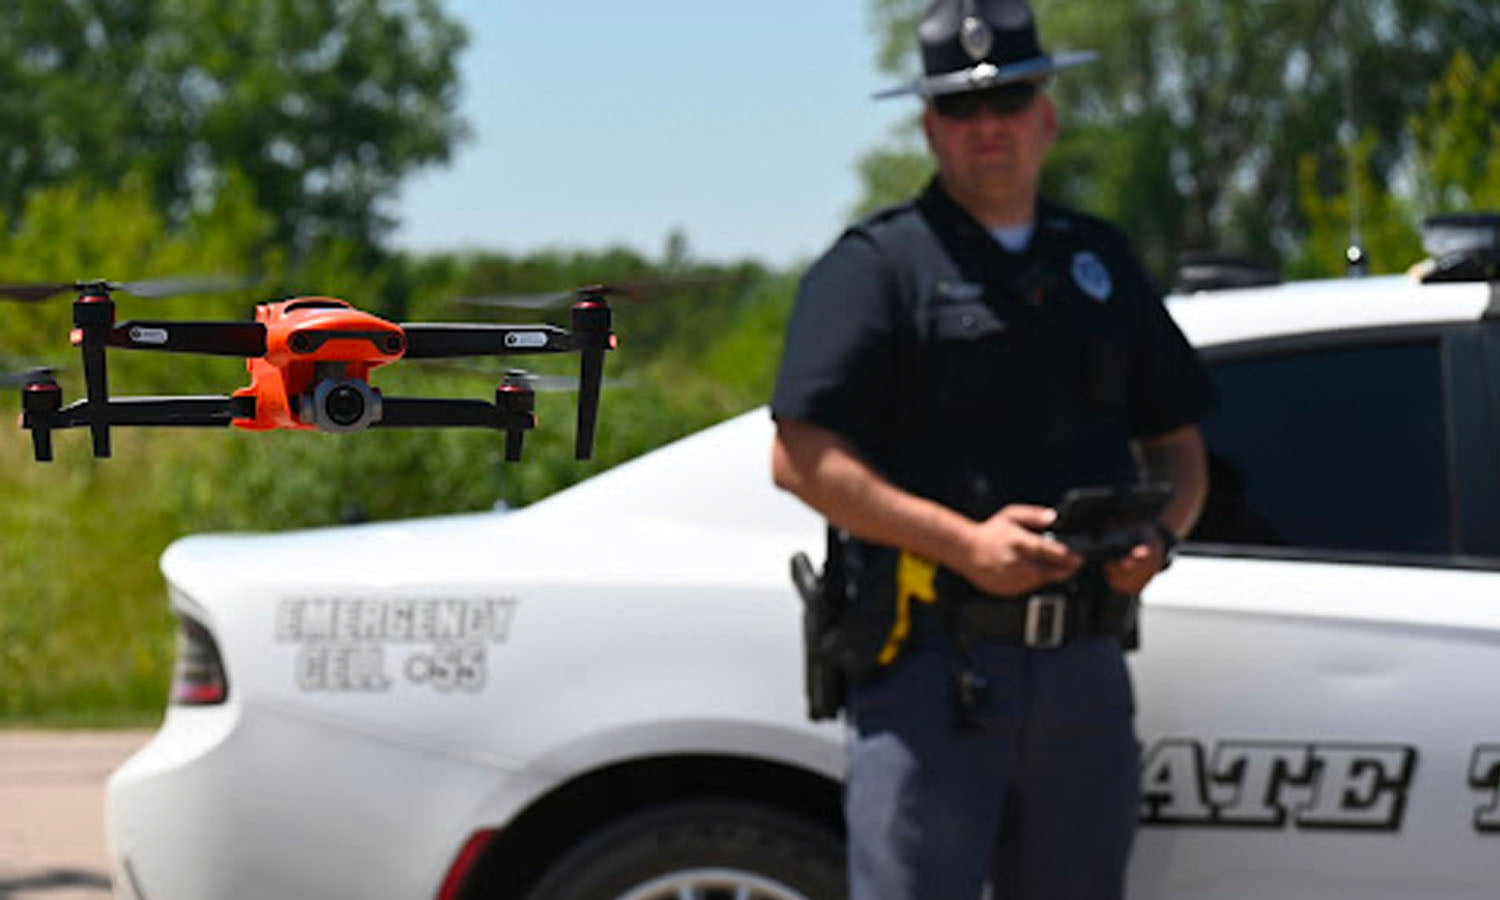 Police drone Autel enters the Nebraska State Patrol